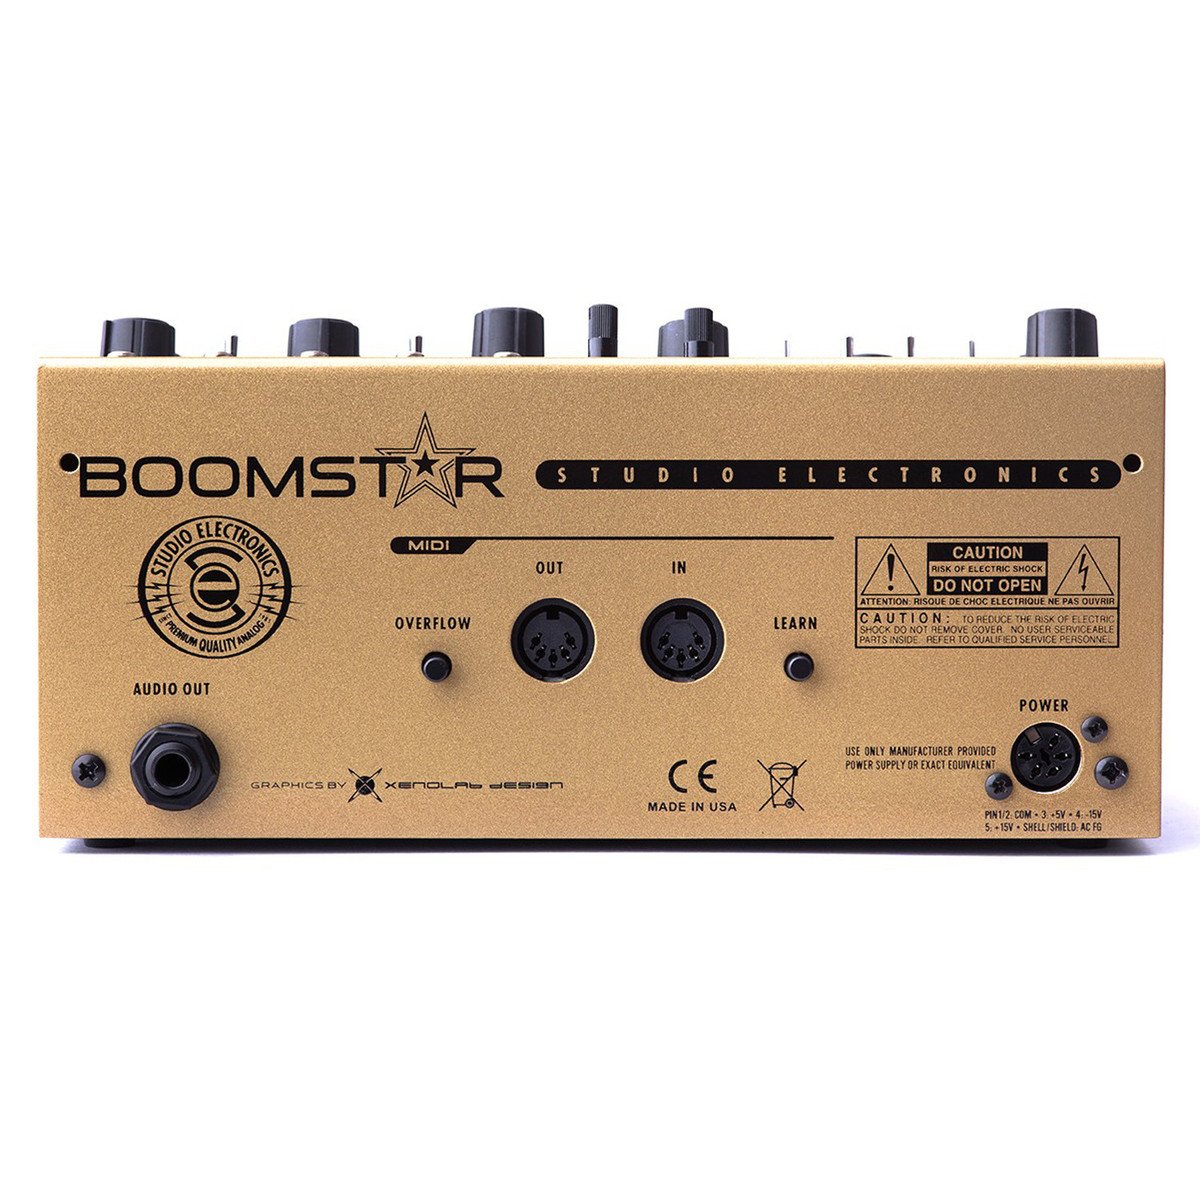   Studio Electronics Boomstar SE 80